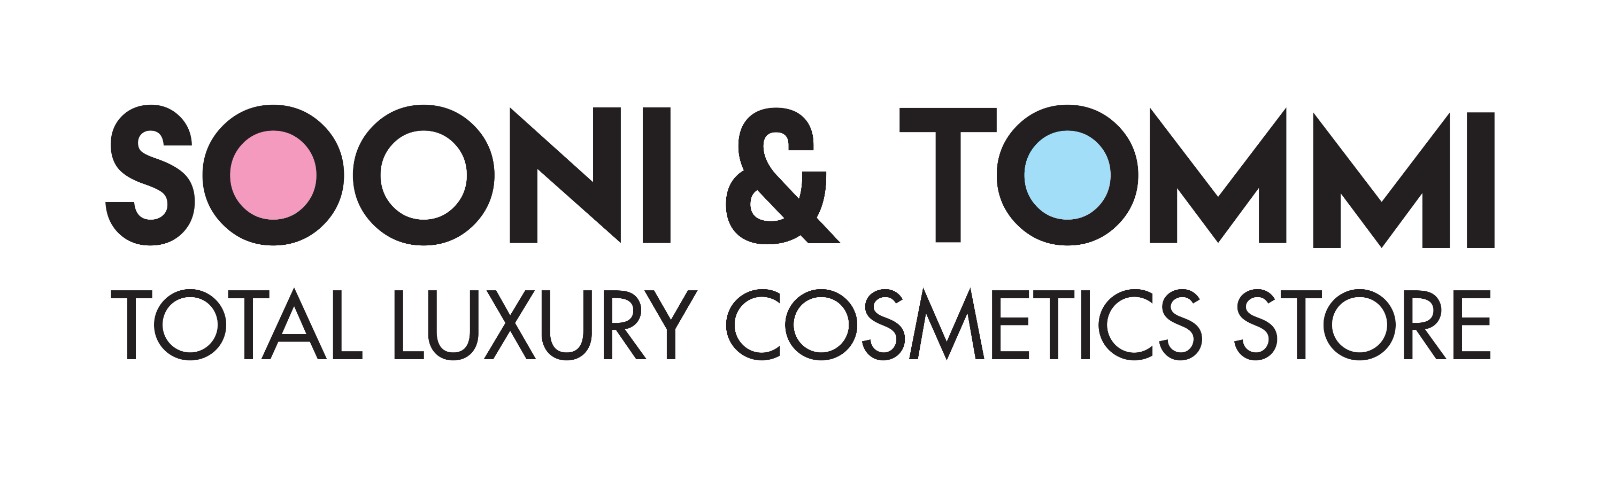 Sooni&Tommi Total Luxury Cosmetics store